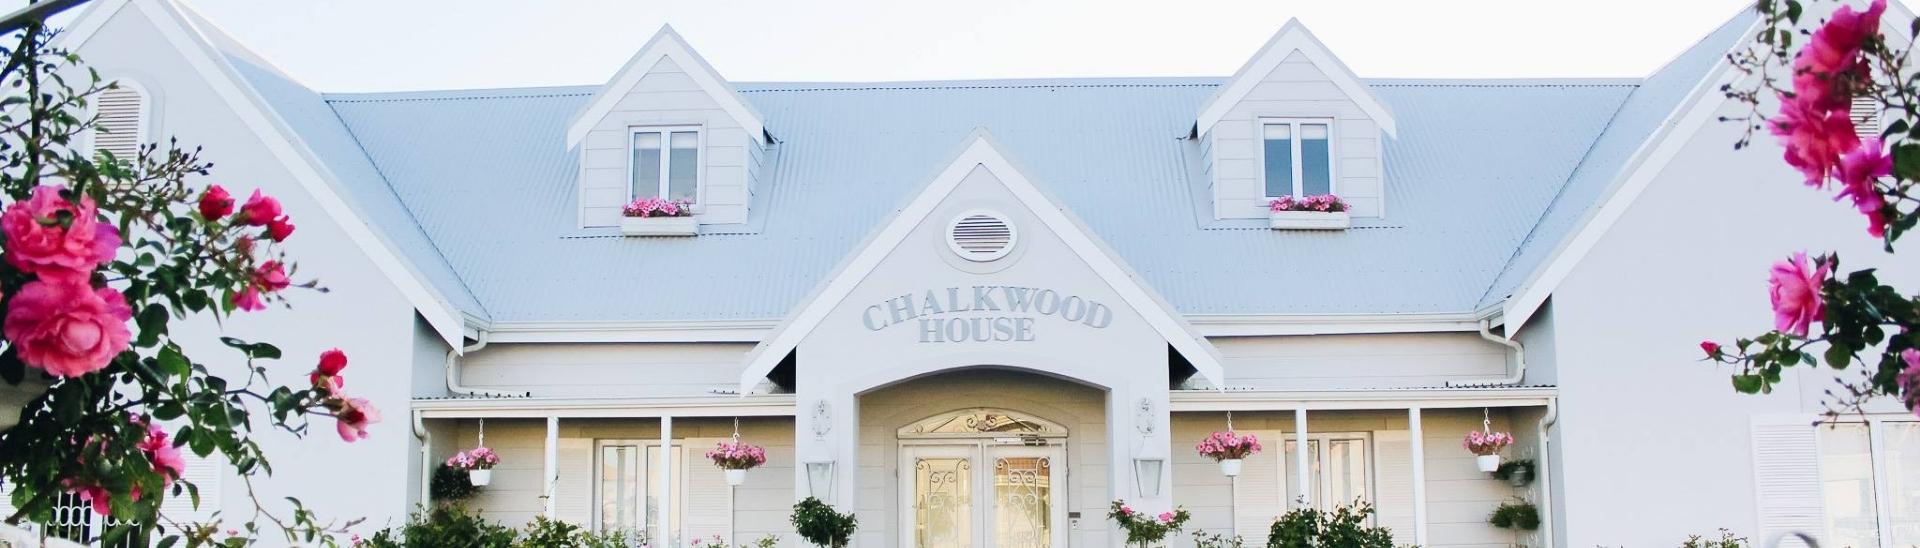 Chalkwood House